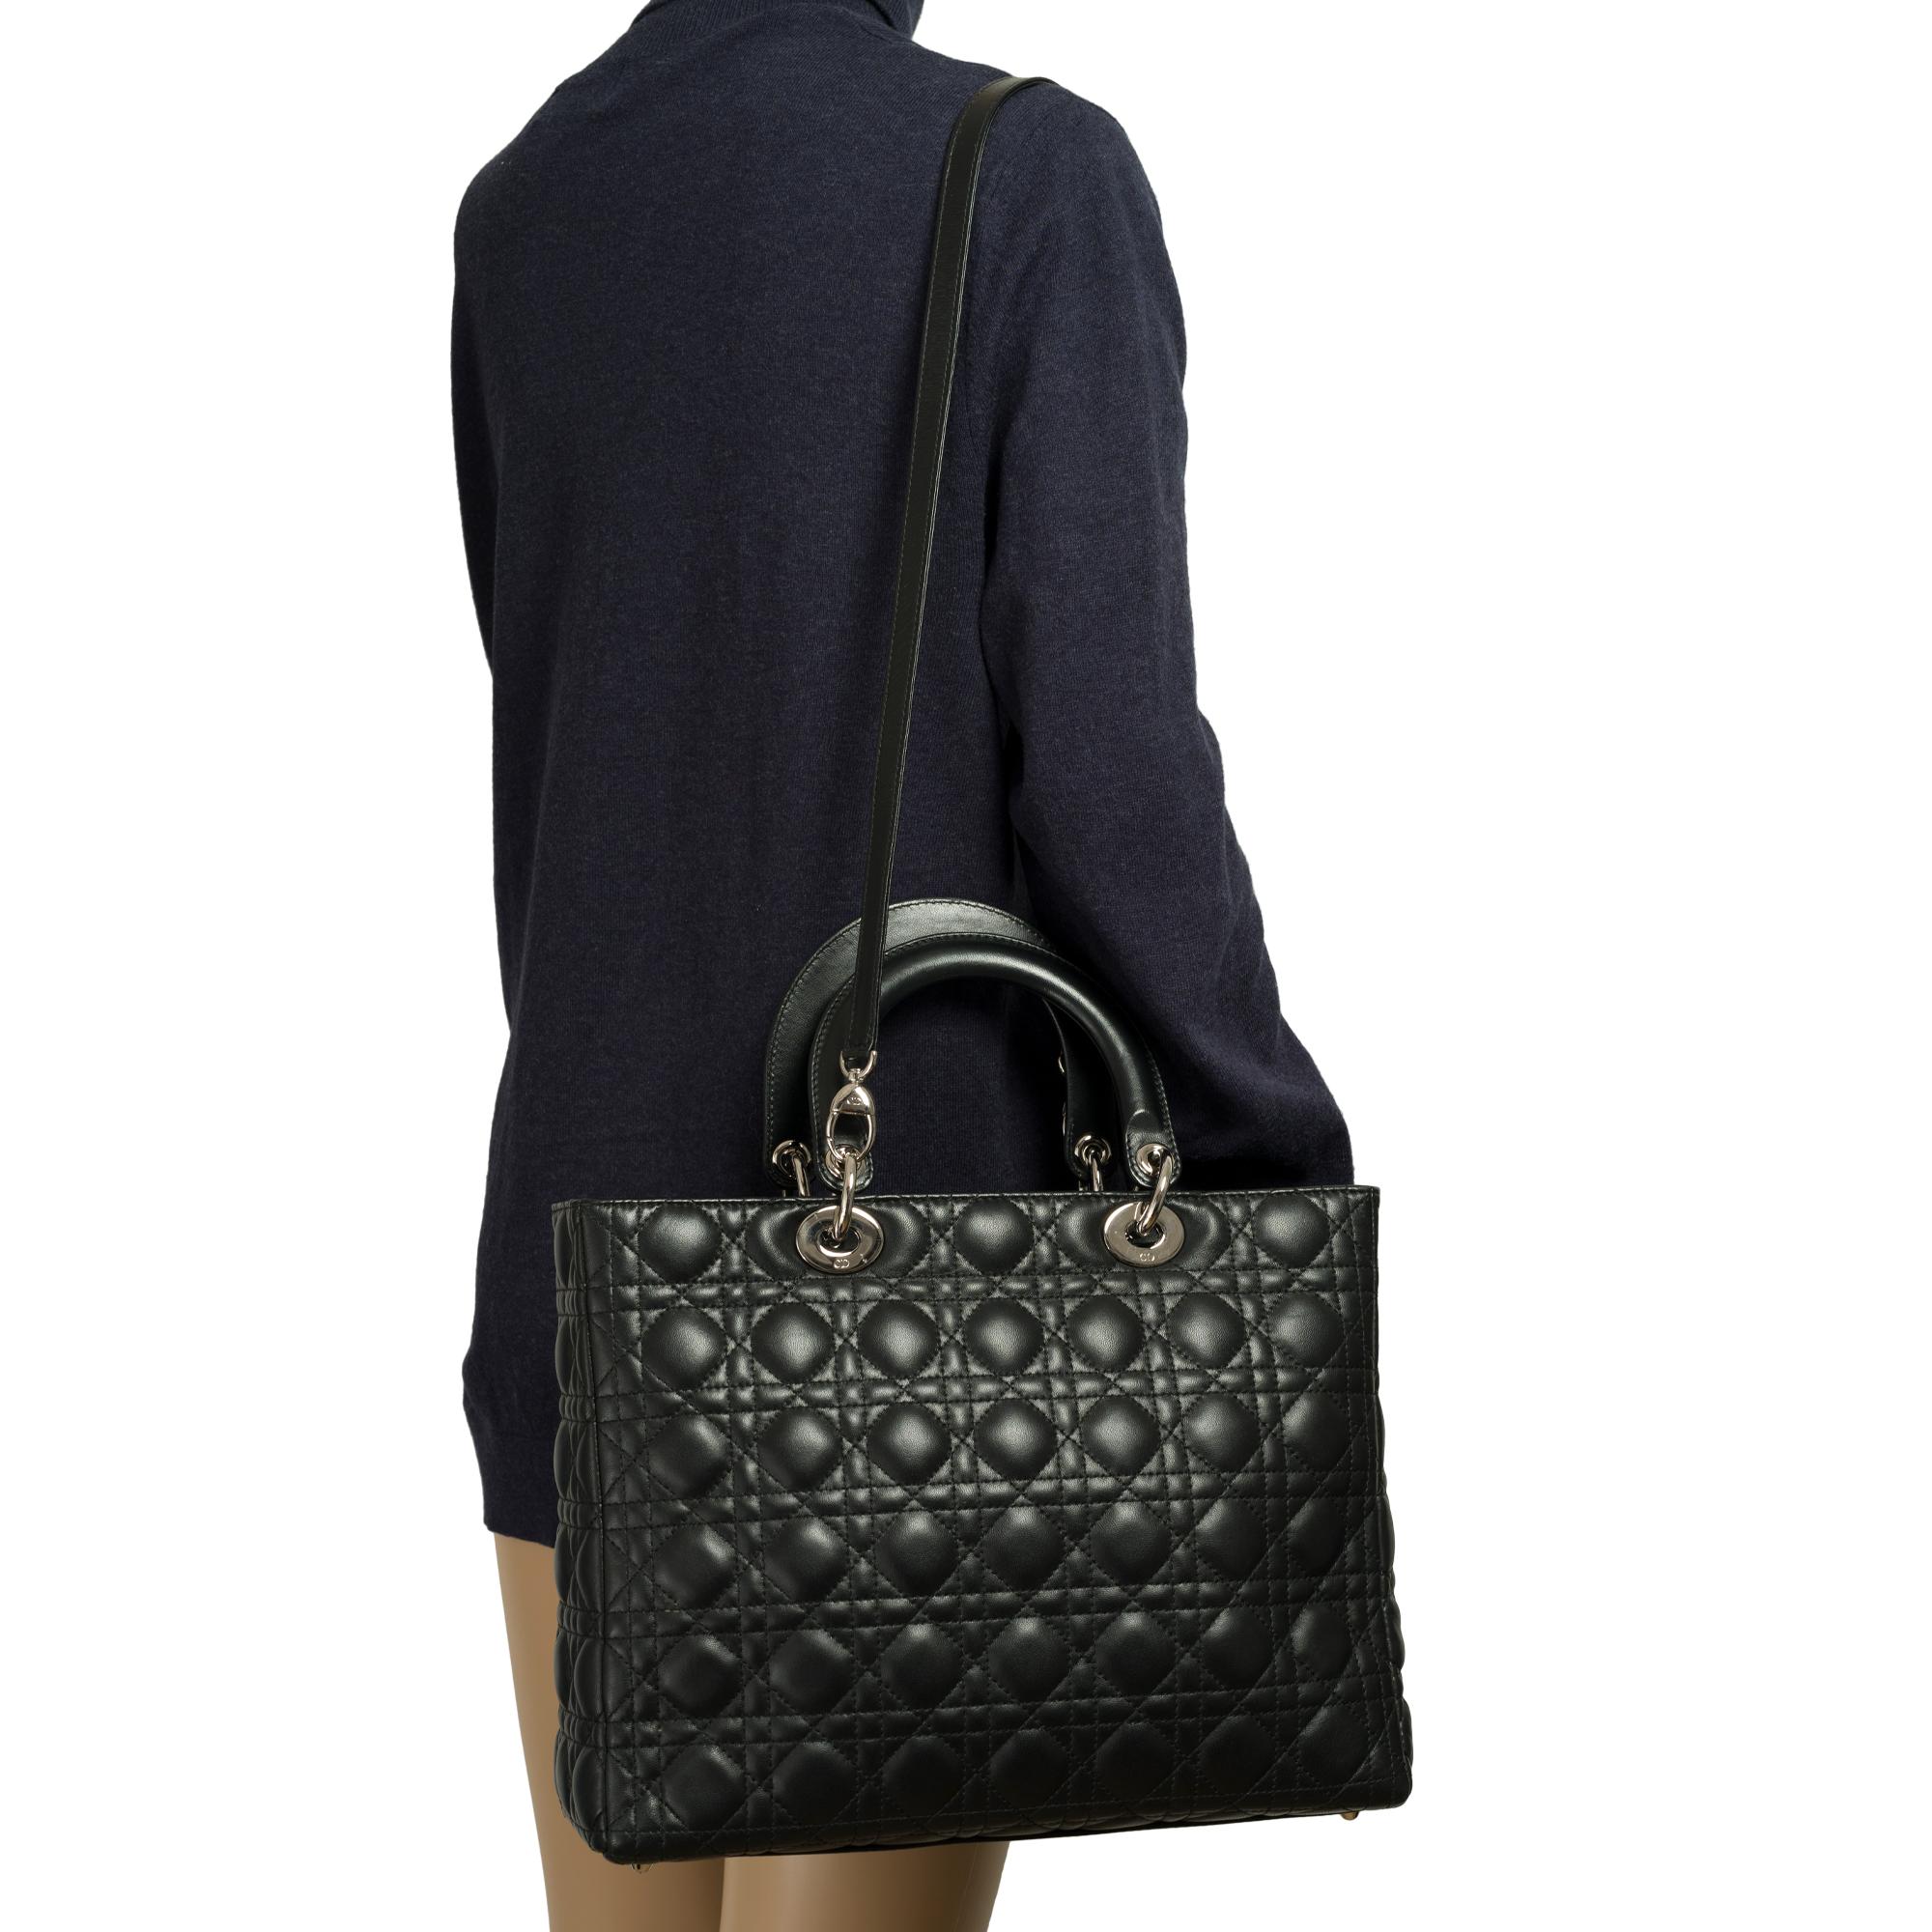  Lady Dior GM ( large model) shoulder bag with strap in black cannage, SHW 4